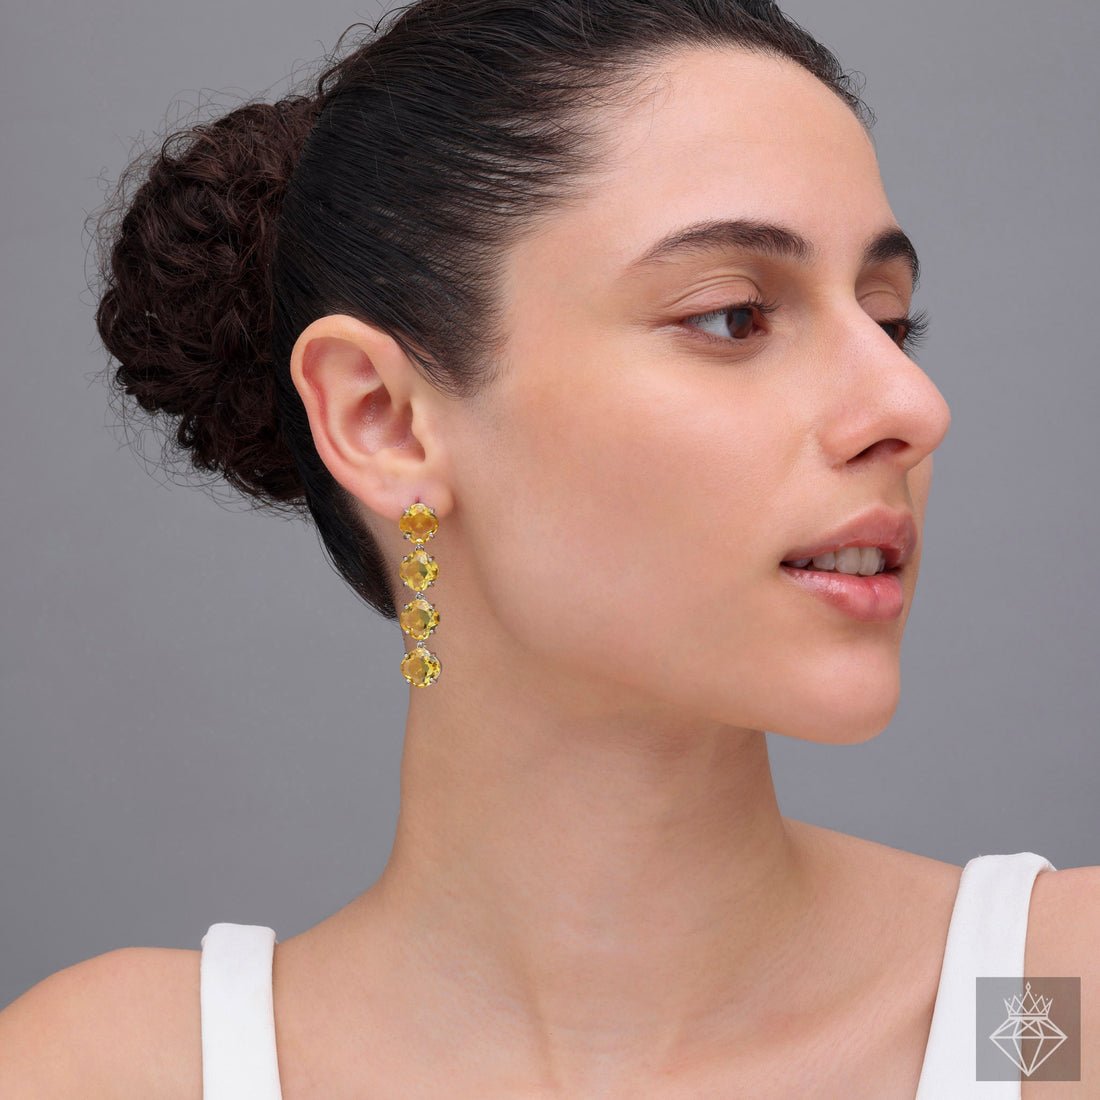 PRAO's Enchanted Dangle Earrings